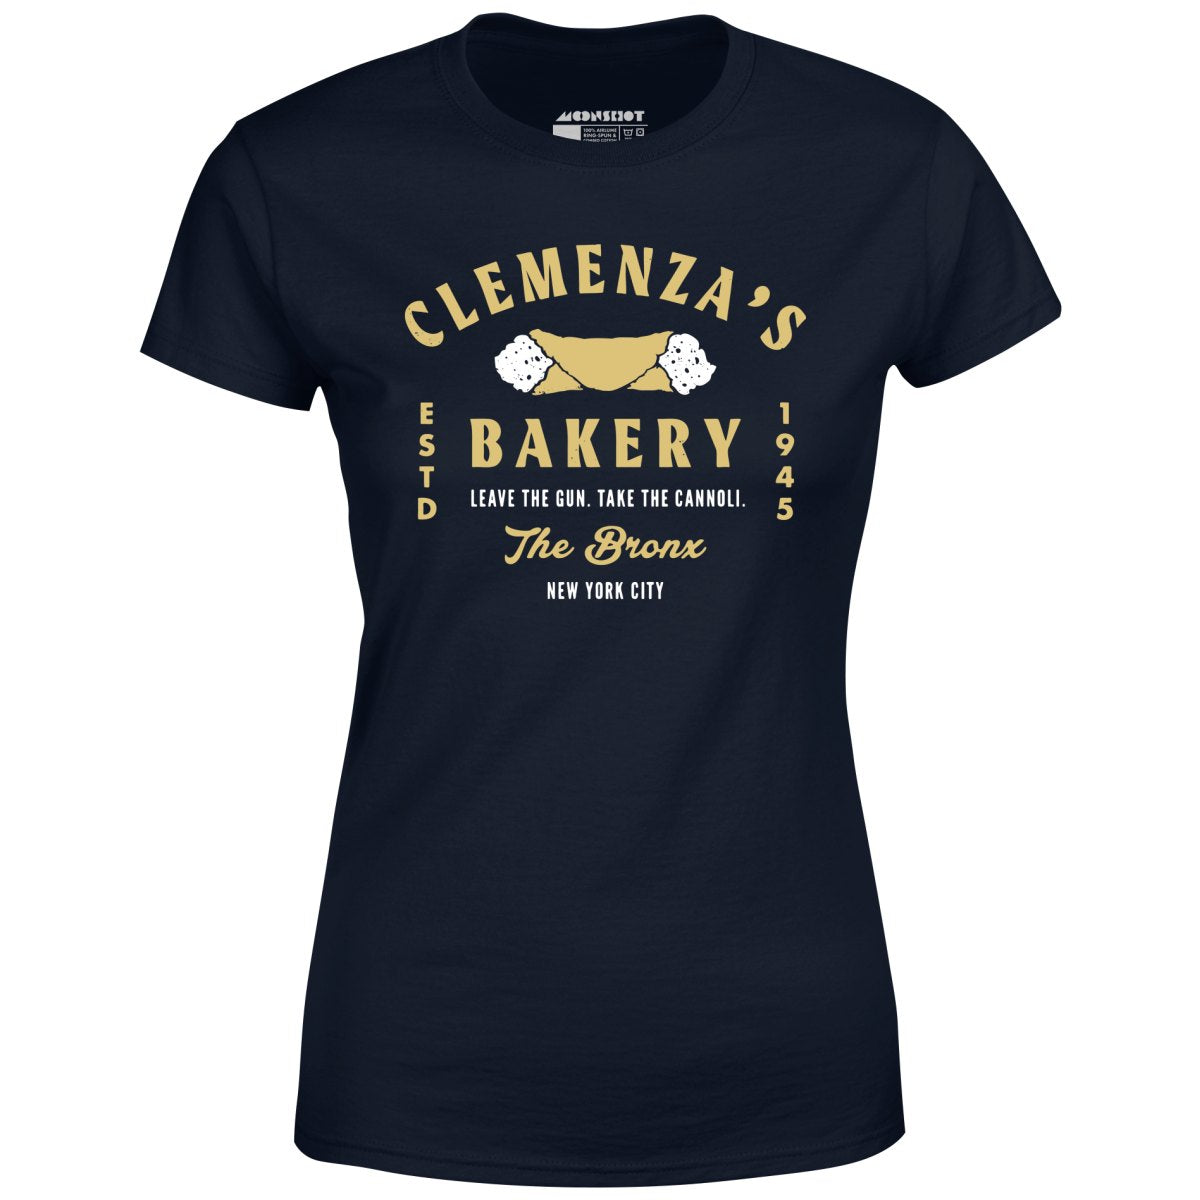 Clemenza's Bakery - Women's T-Shirt